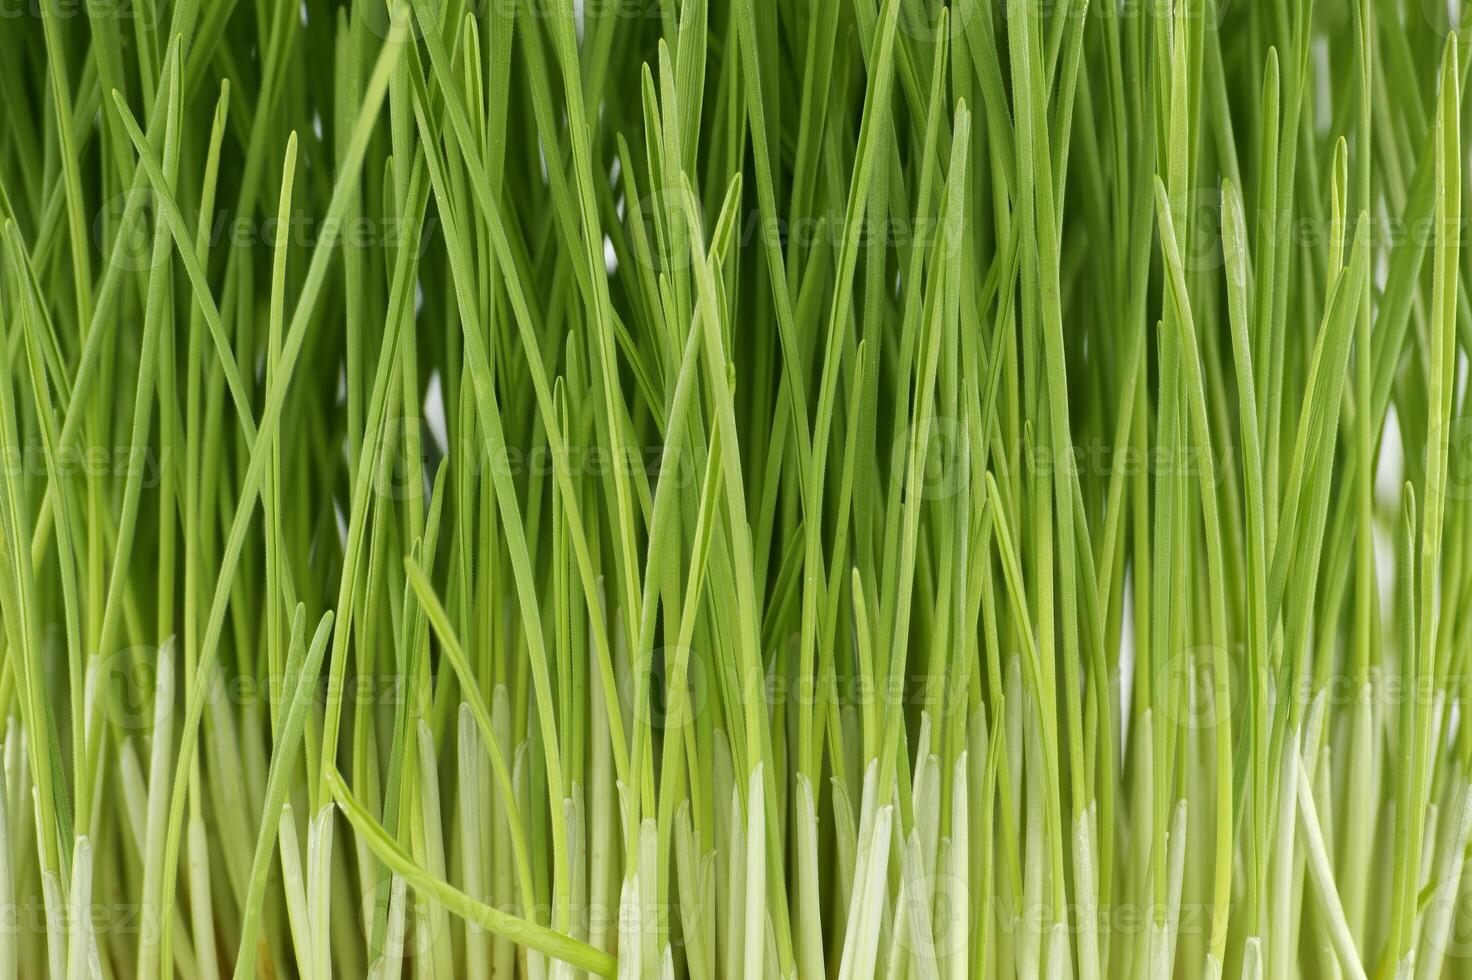 Fresh green wheatgrass stalks in close up photo